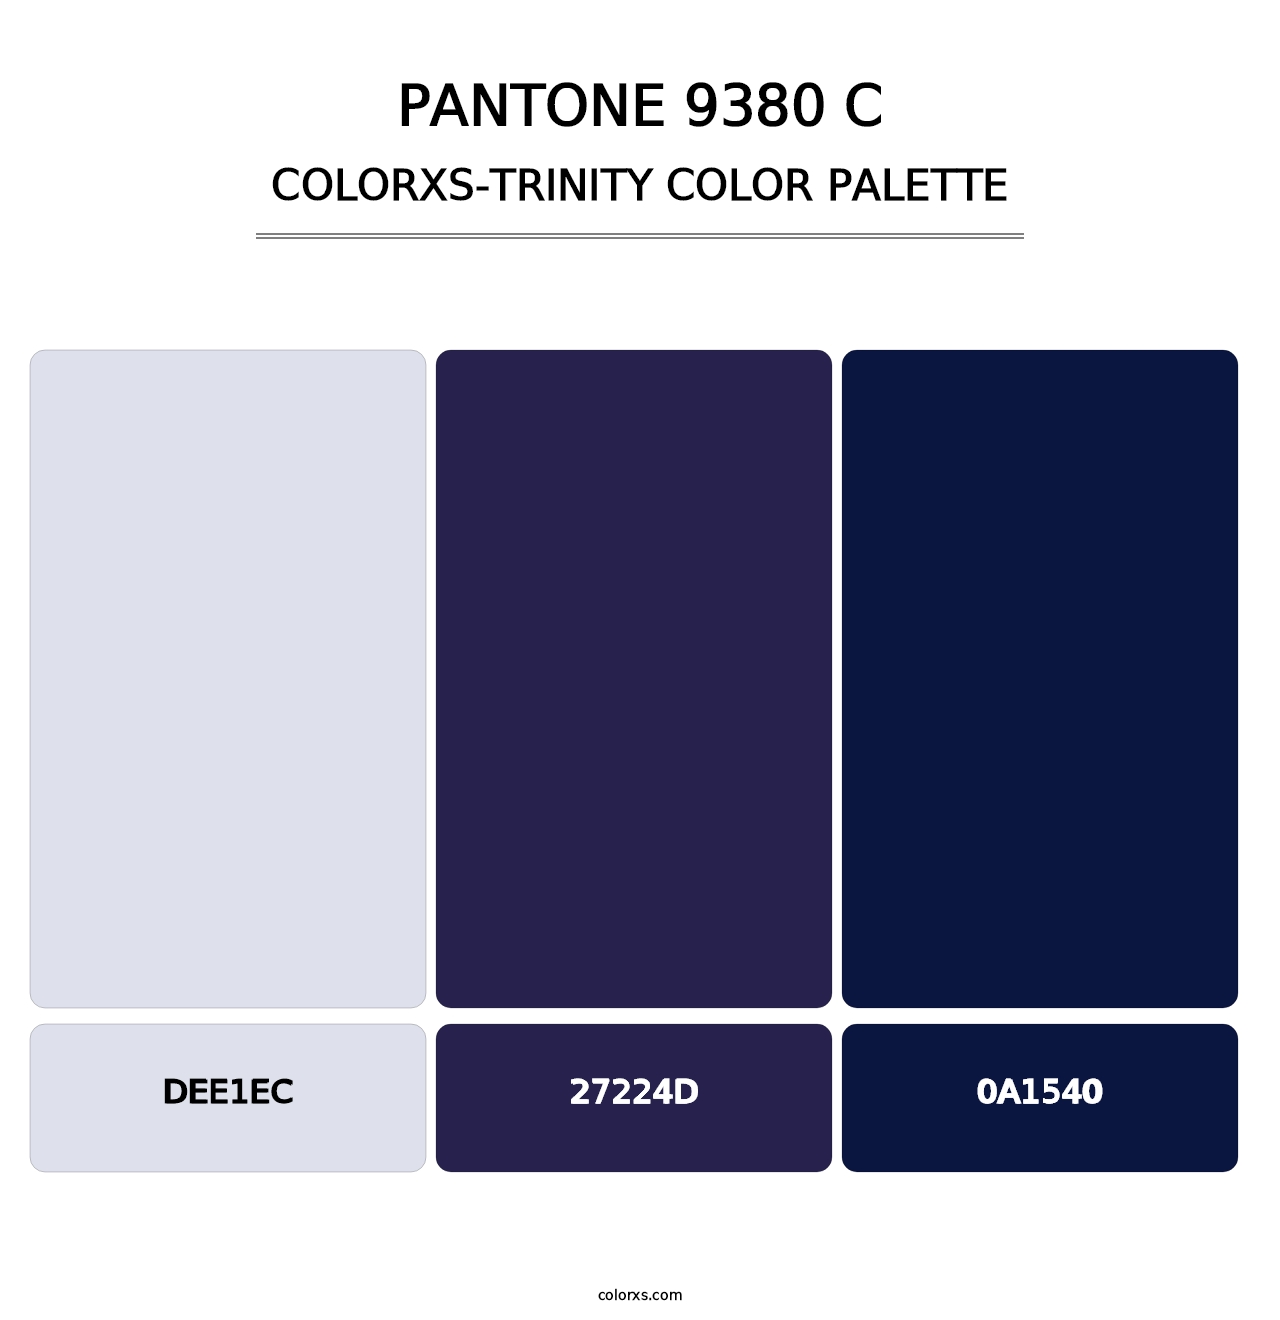 PANTONE 9380 C - Colorxs Trinity Palette